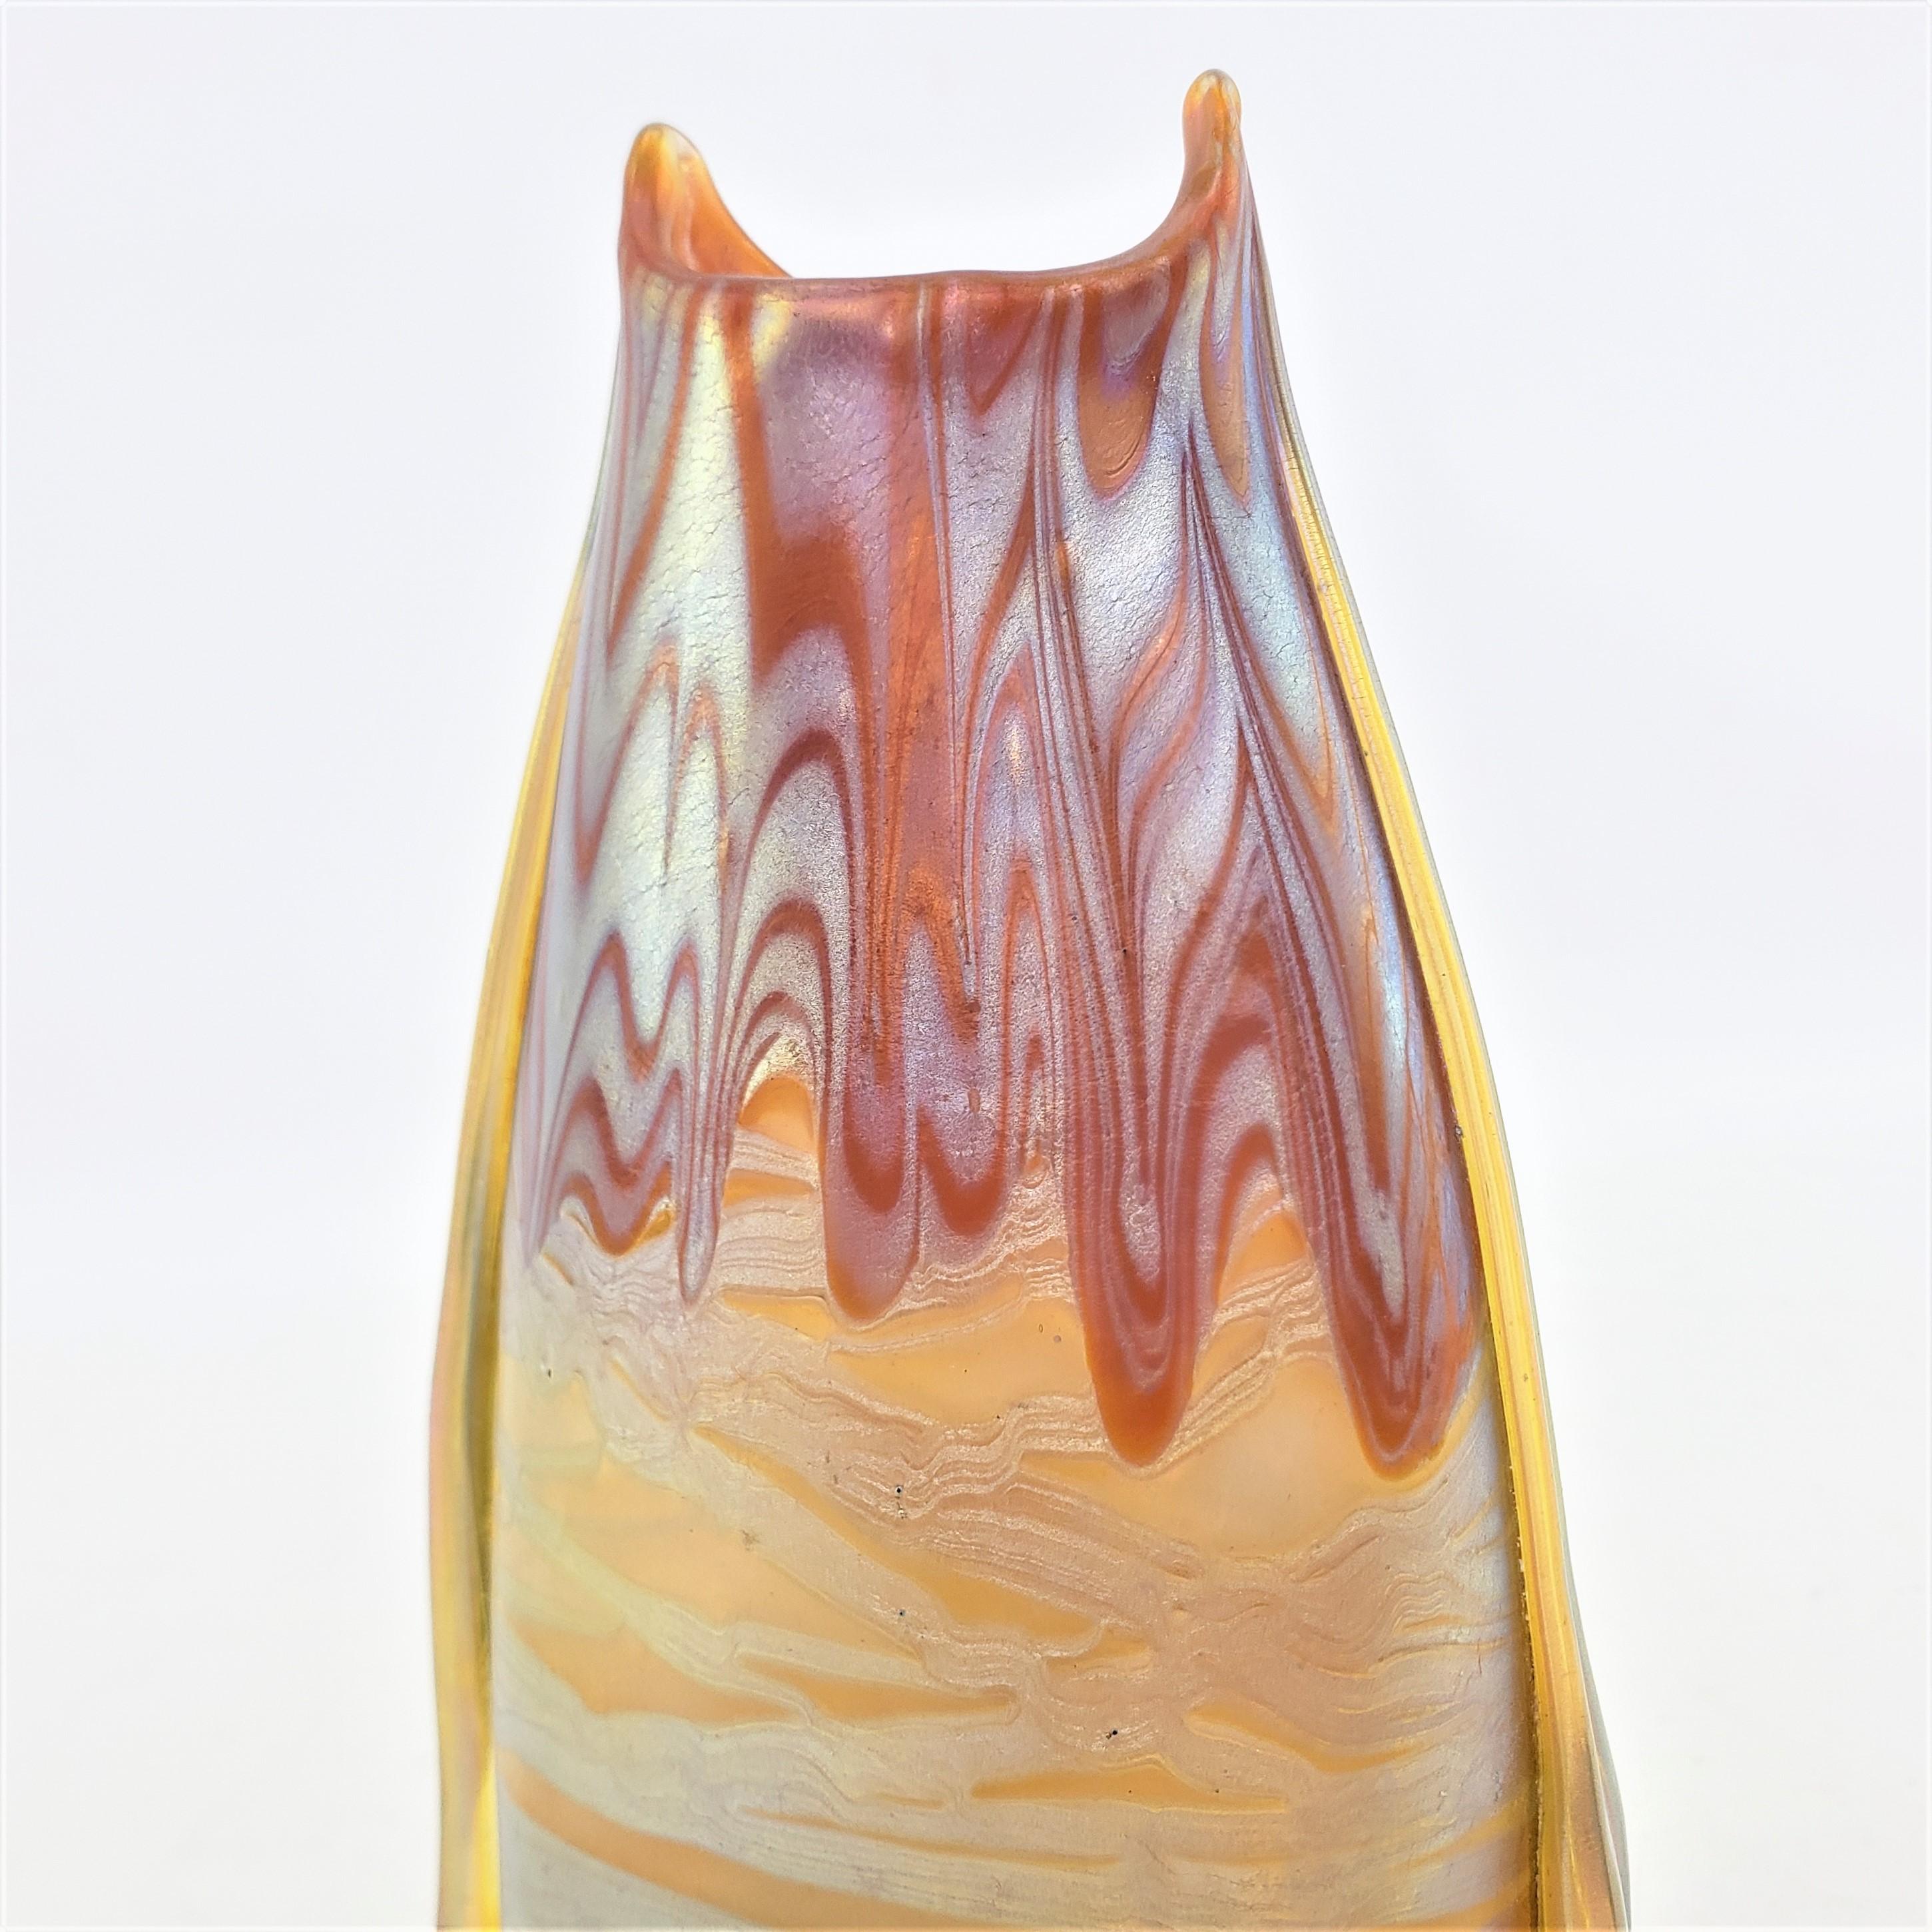 Hofstoetter Designed Signed Loetz Large Antique Art Glass Irridescent Vase 7